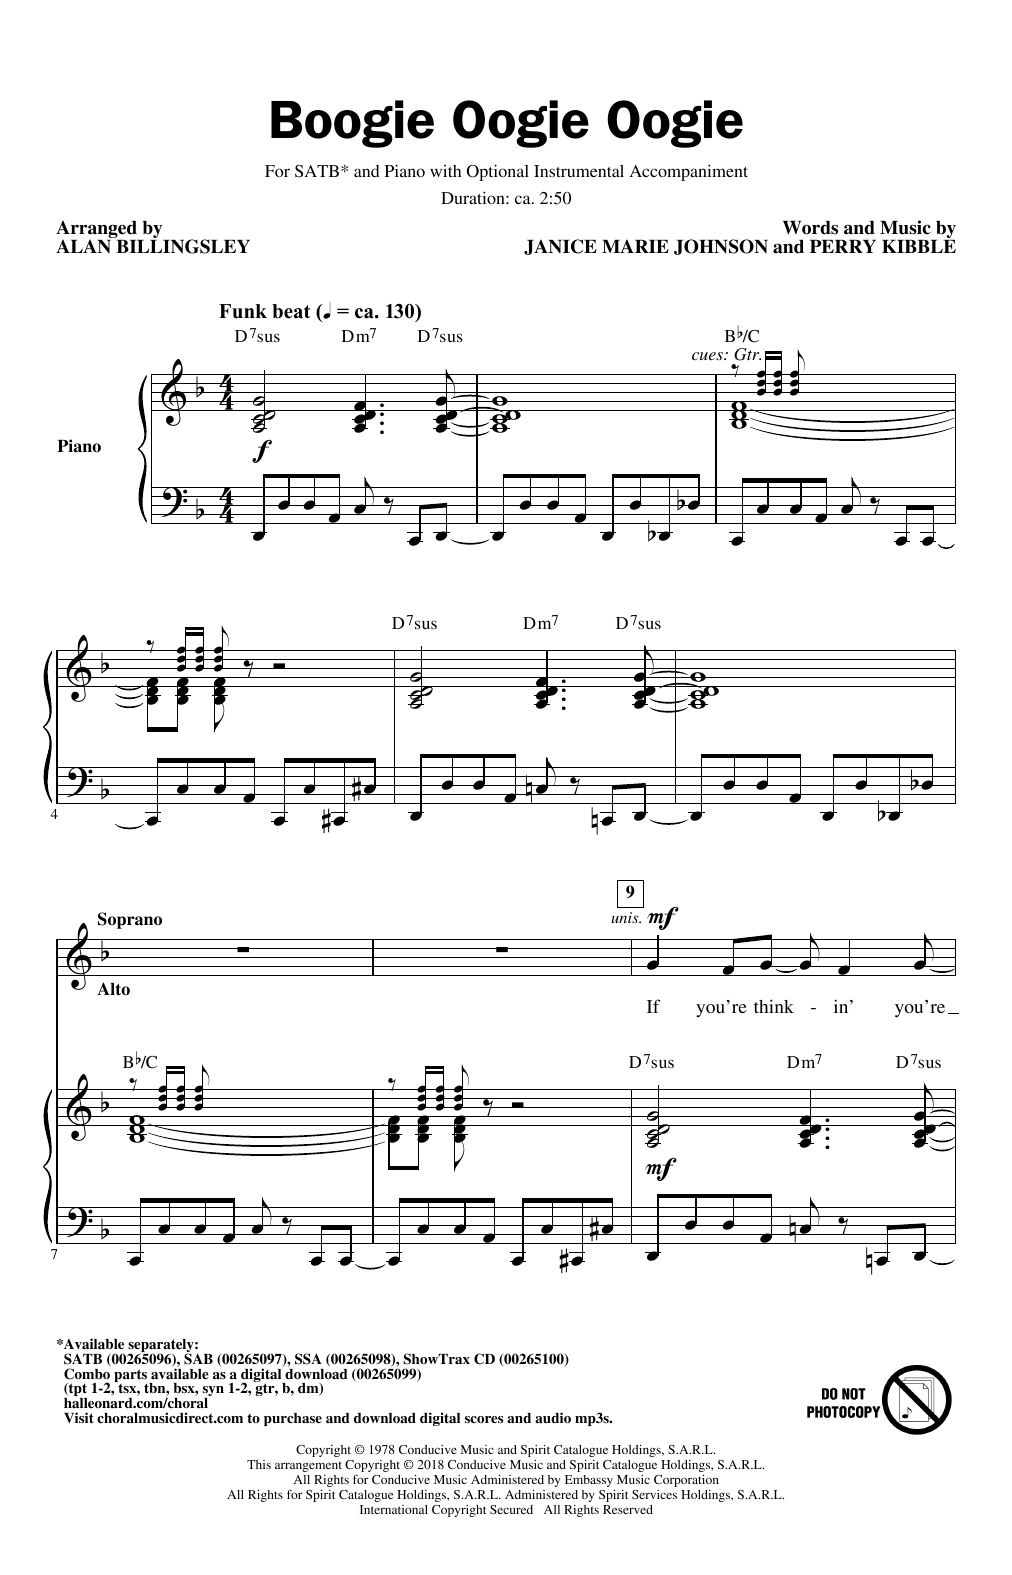 A Taste Of Honey Boogie Oogie Oogie (arr. Alan Billingsley) Sheet Music Notes & Chords for SATB - Download or Print PDF